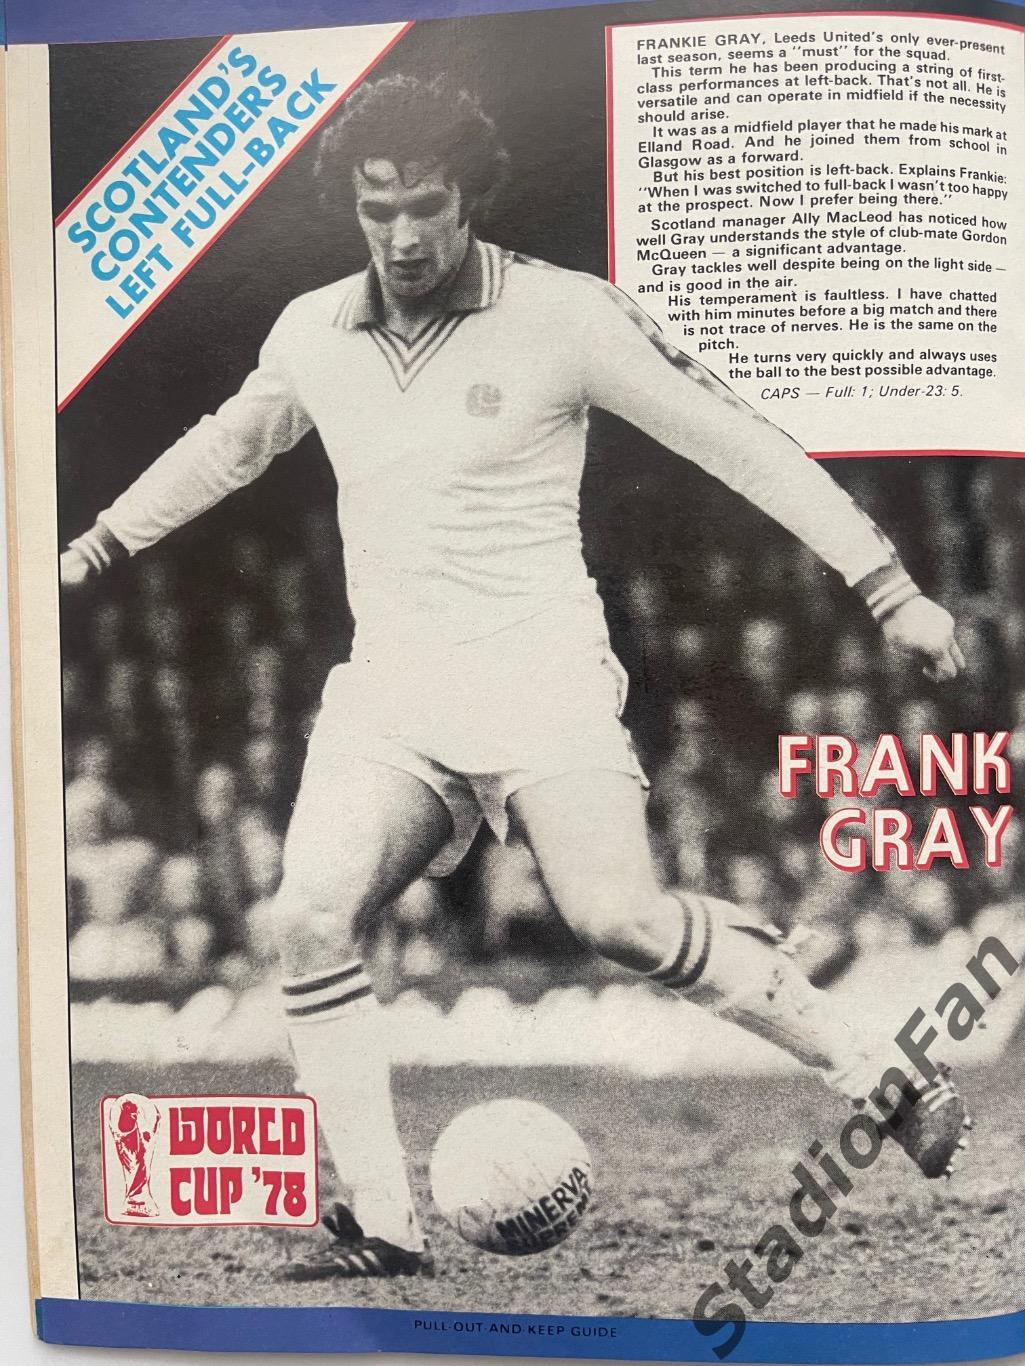 Журнал FOOTBALL - 1978 год, февраль. 5